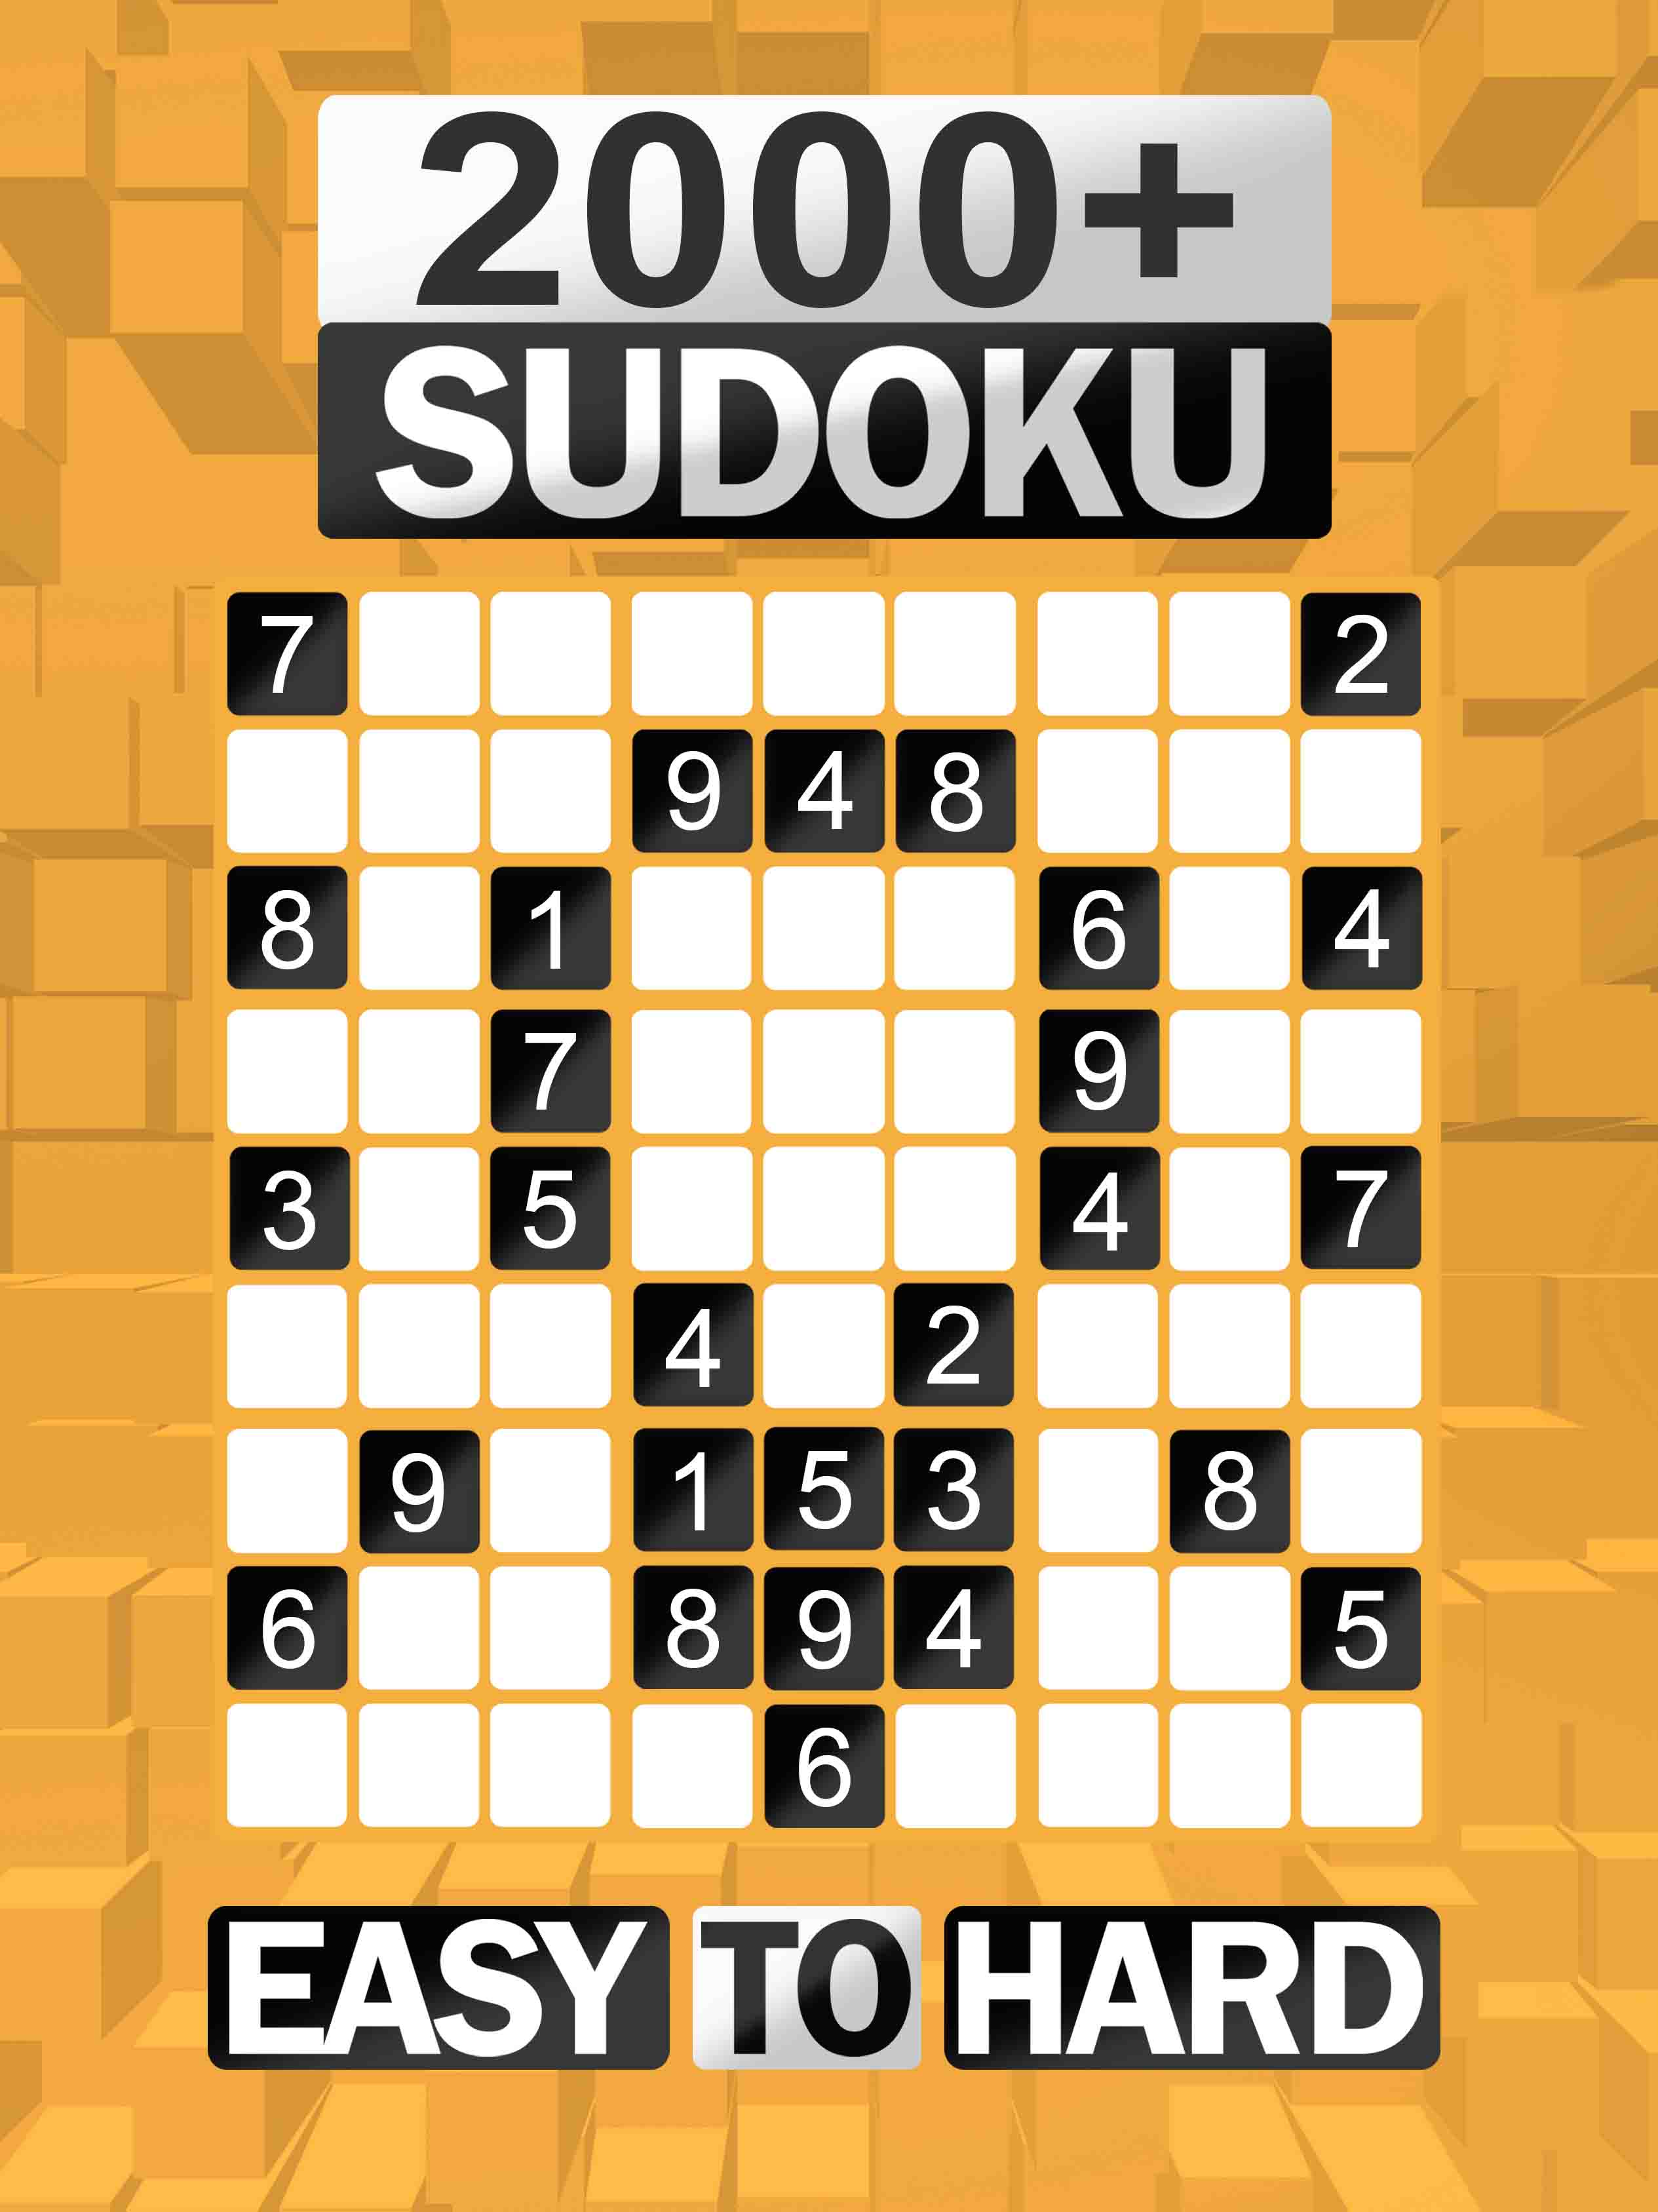 sudoku easy to hard